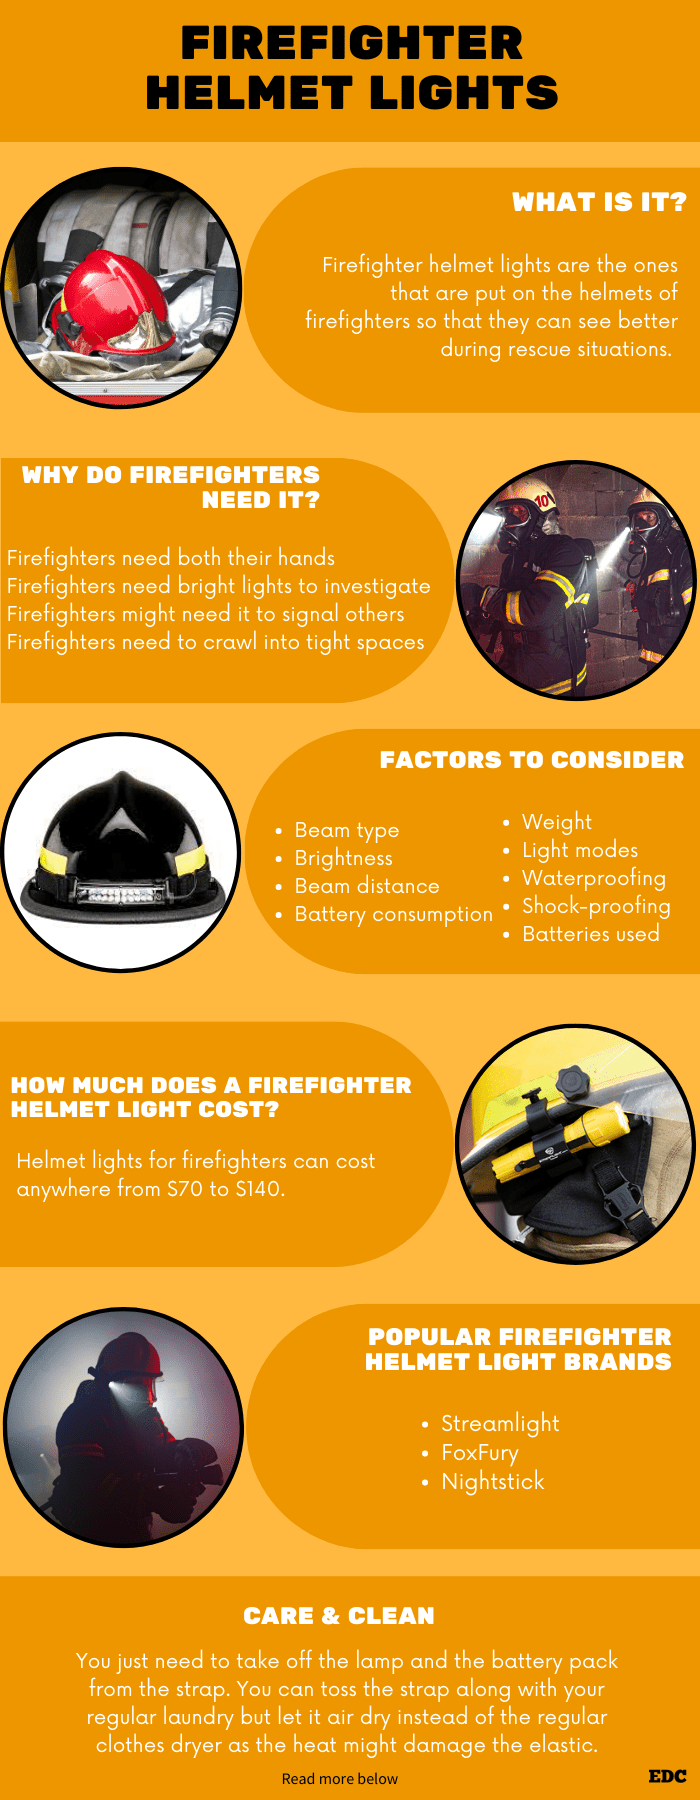 streamlight-firefighter-helmet-light